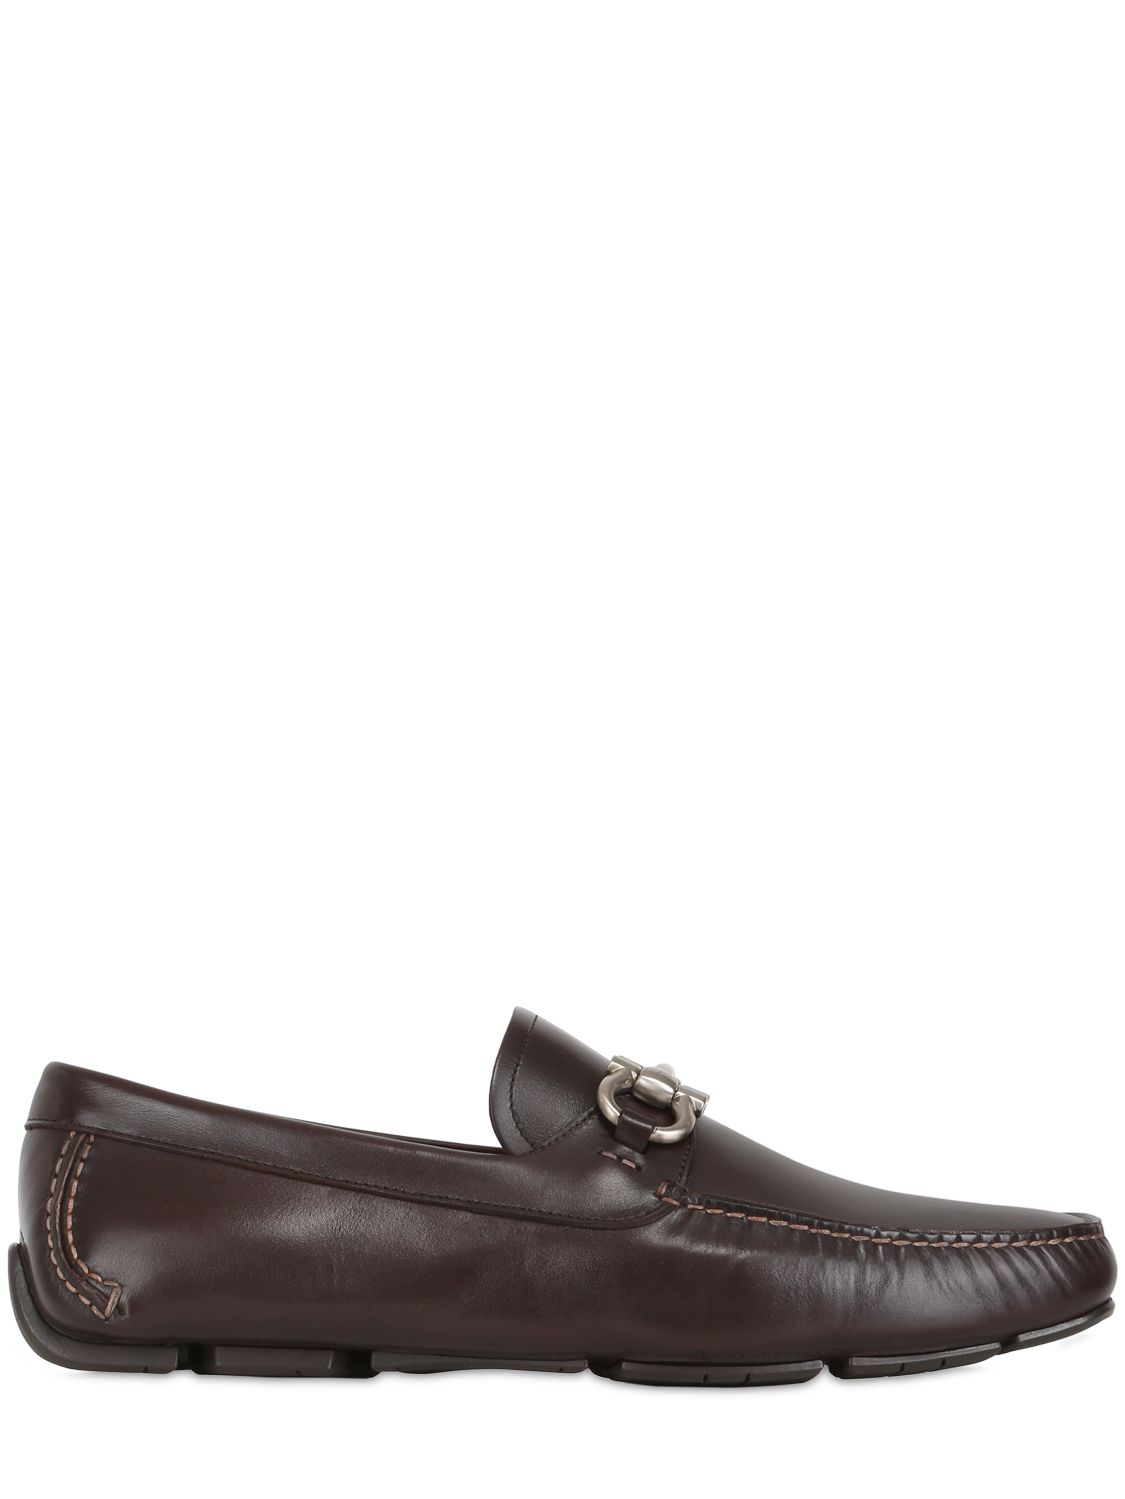 Lyst - Ferragamo Parigi Leather Driving Loafers in Brown for Men